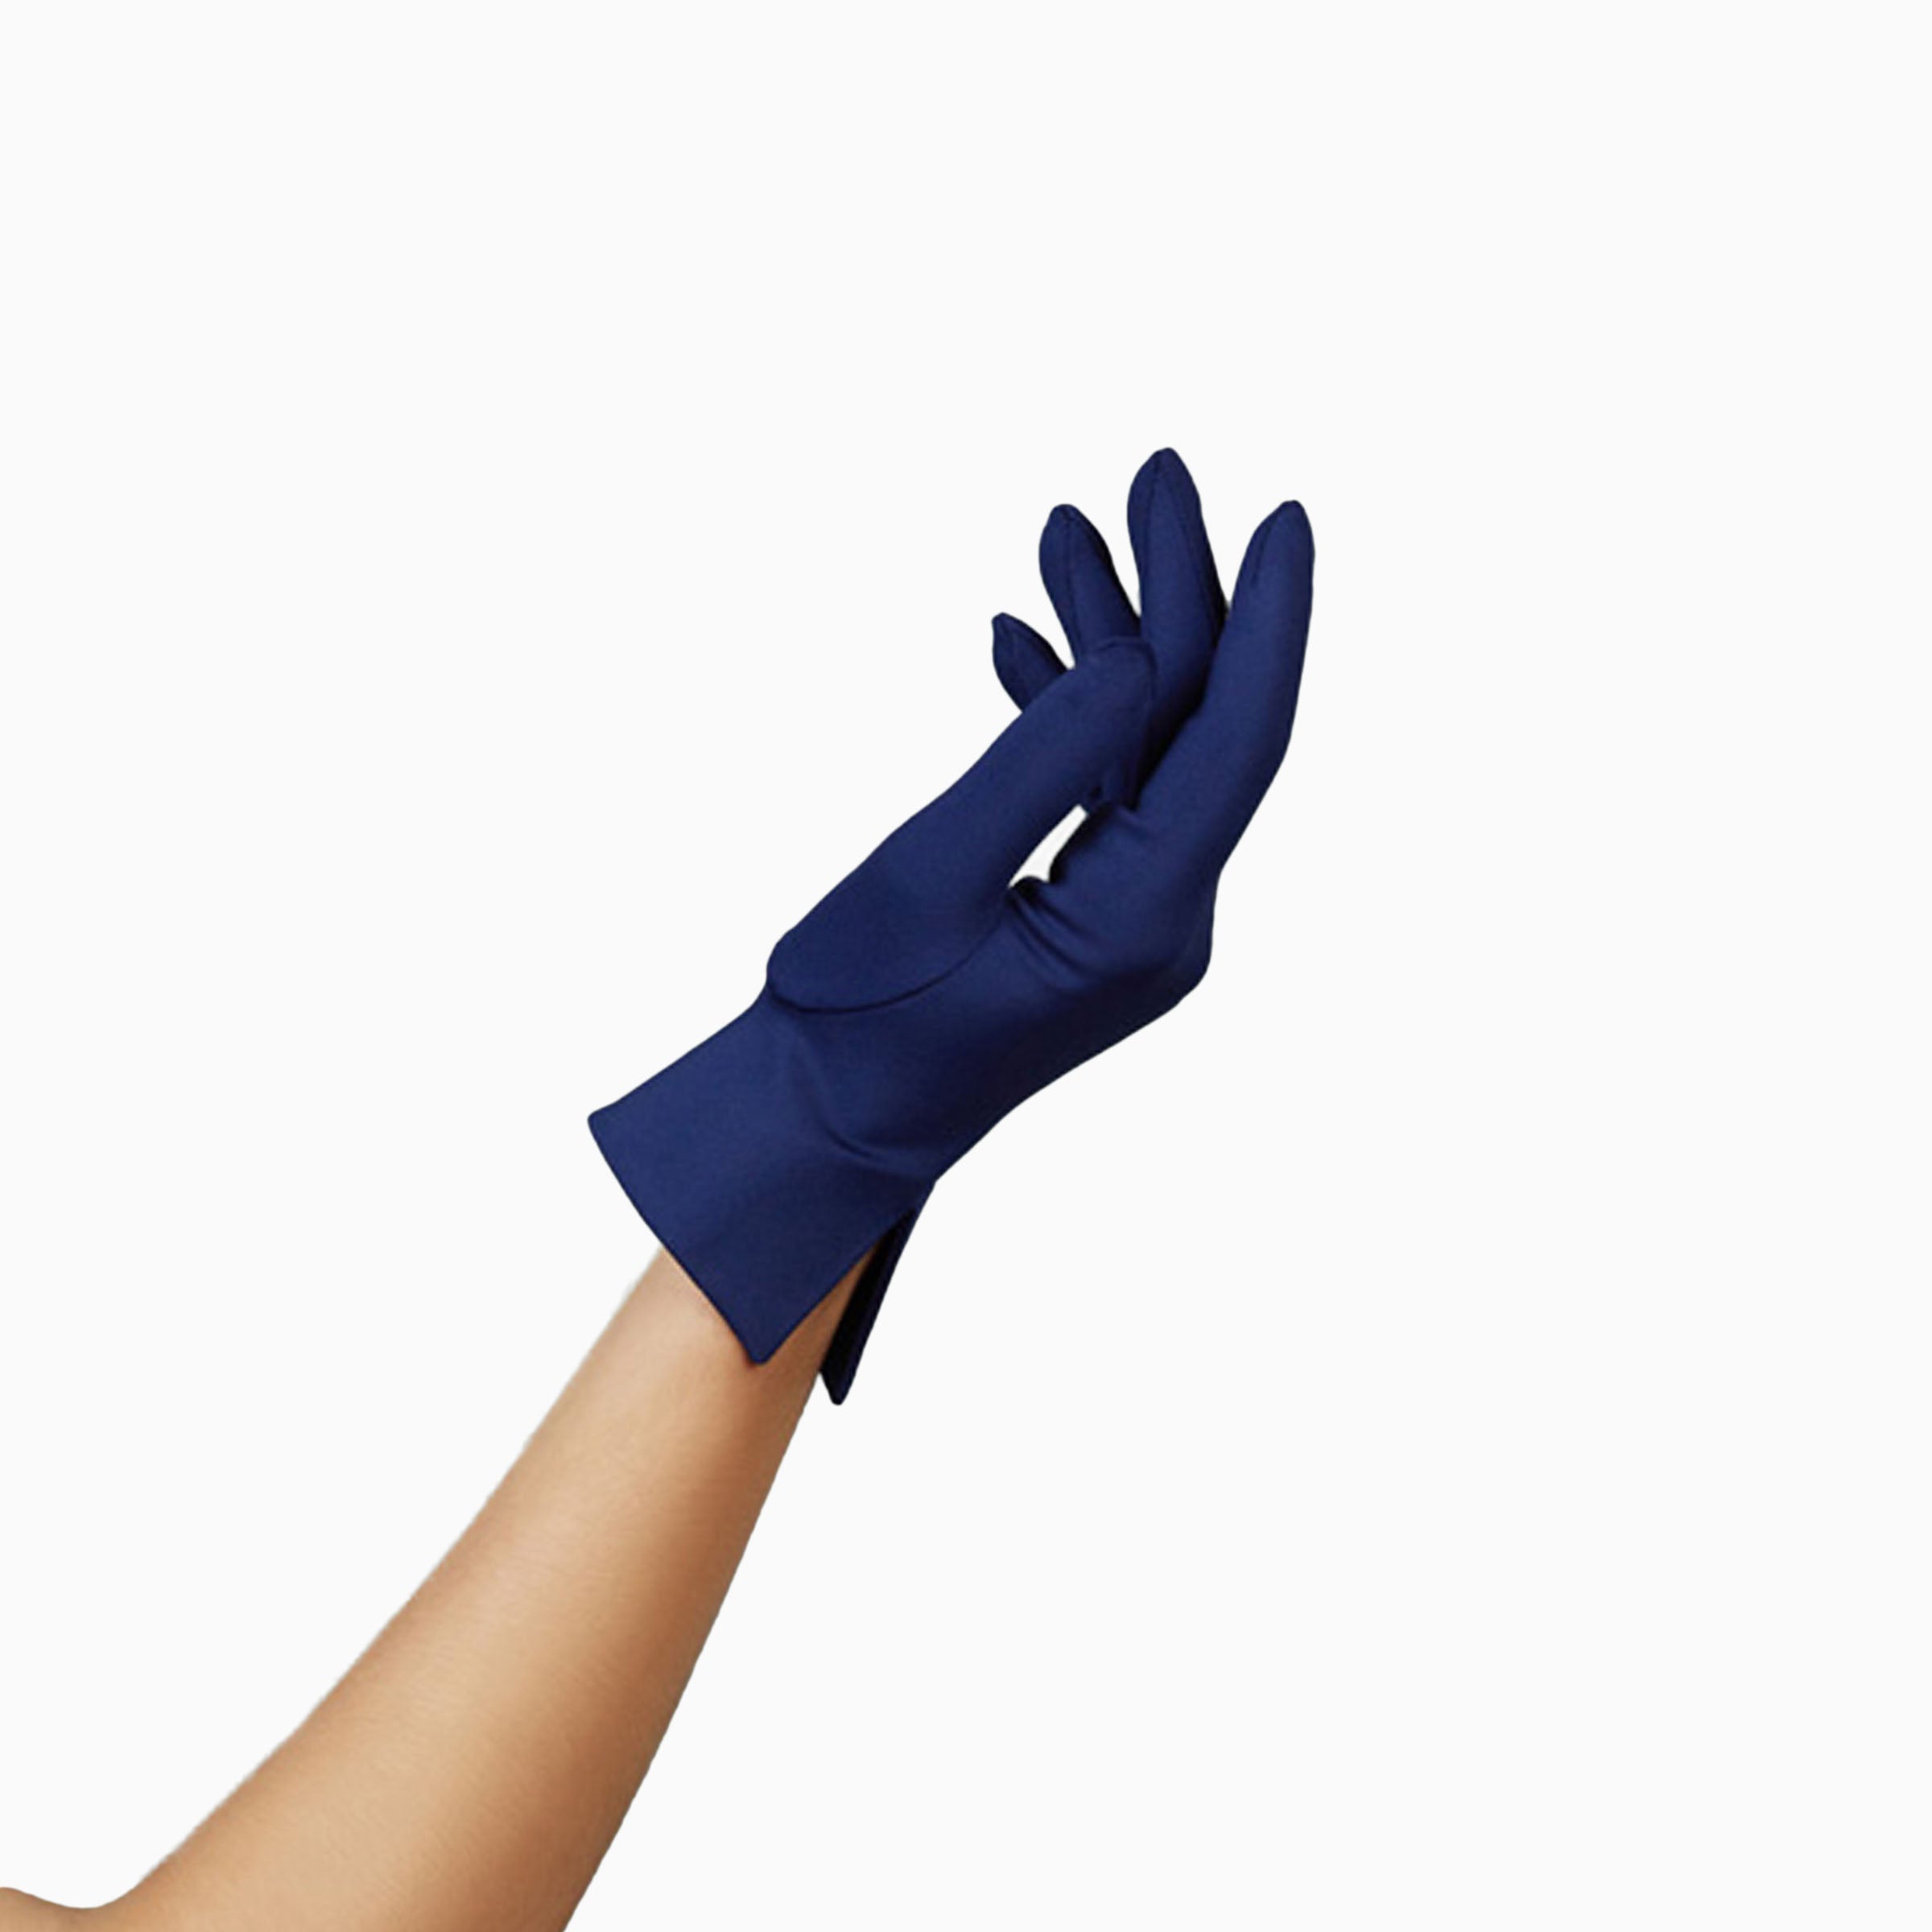 THE ISABELLE wrist length luxury women&#39;s glove in Parisian Blue.